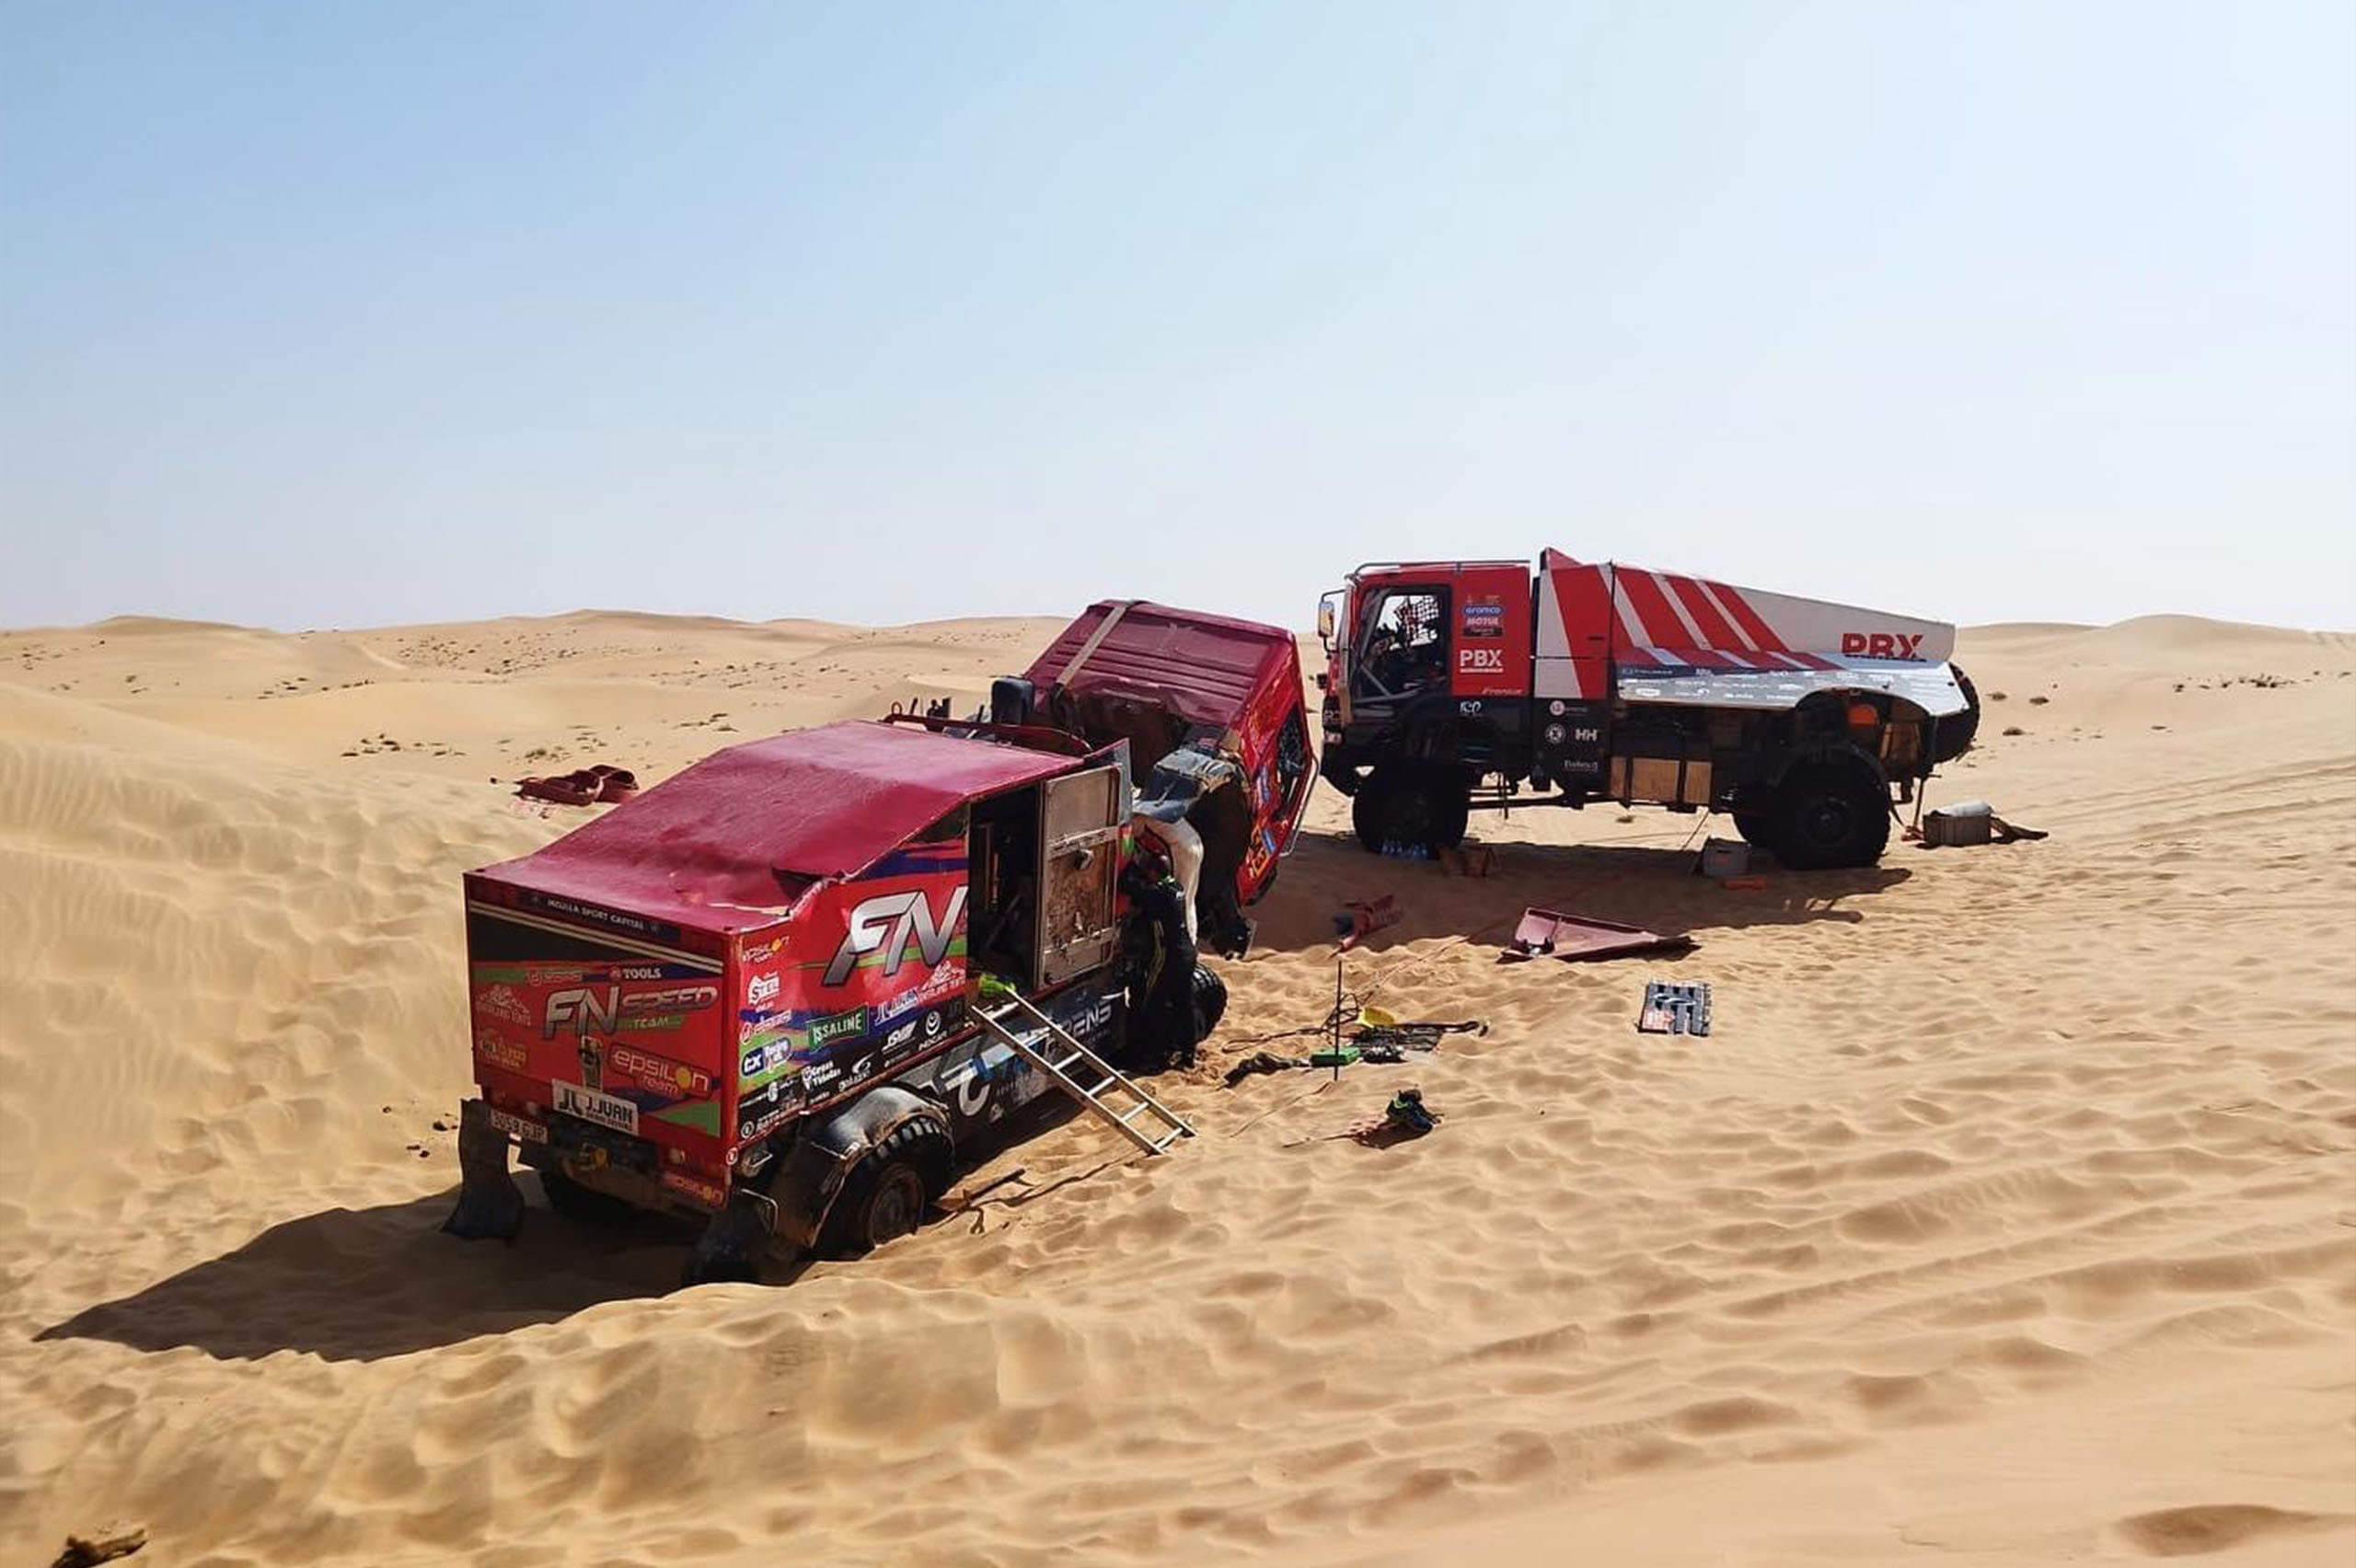 dakar team - camion dakar - camion dunas desierto - pbx dakar team - palibex